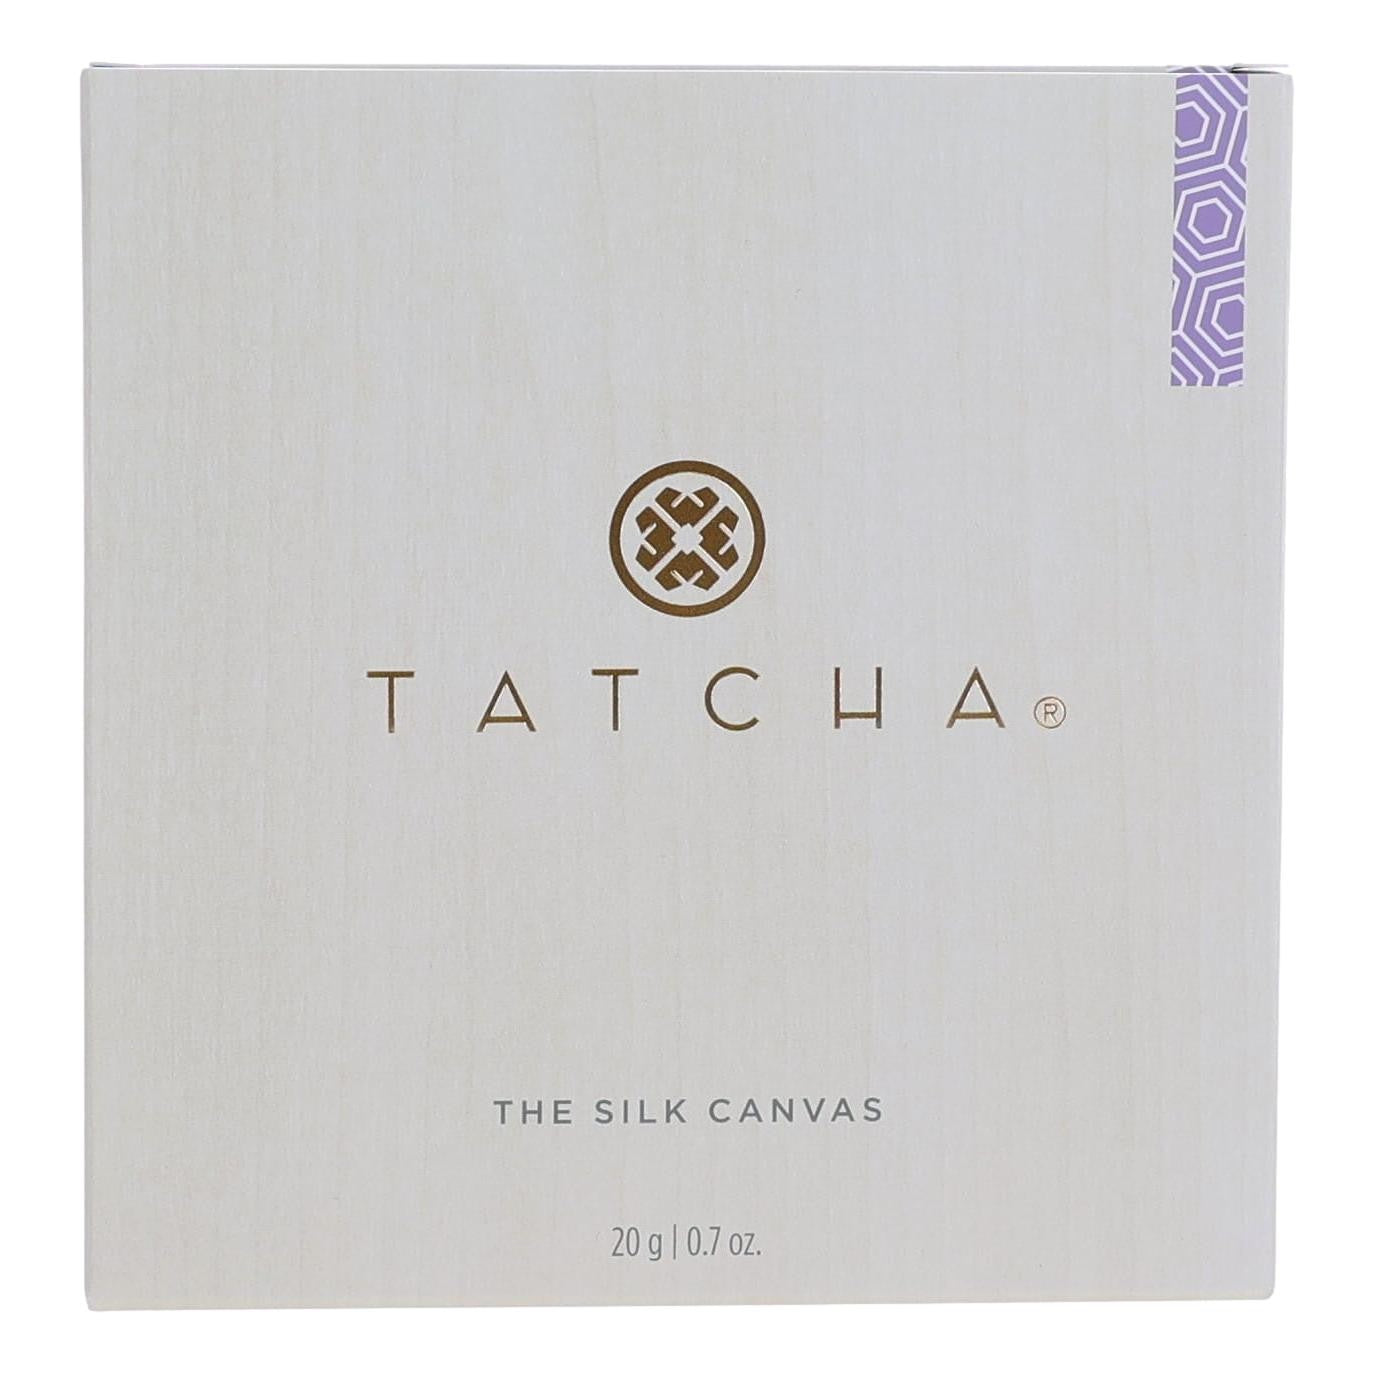 Tatcha The Silk Canvas by Tatcha, .7 oz Protective Primer